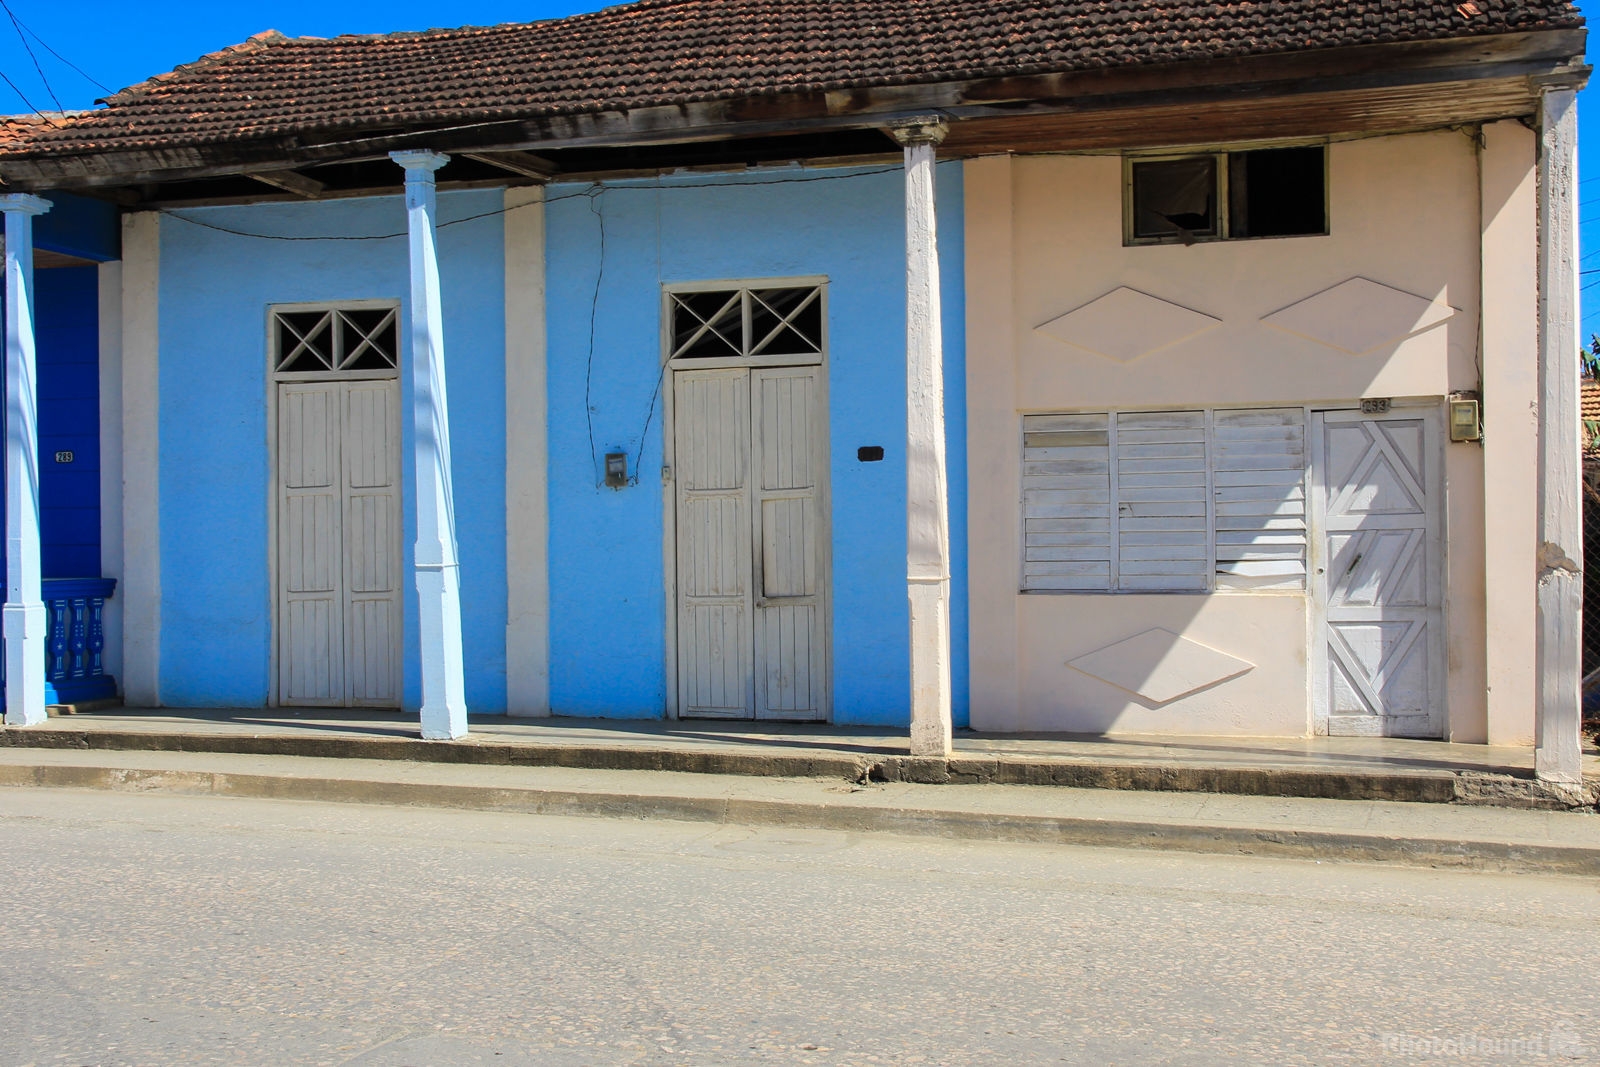 Image of Buildings of Baracoa by Saša Jamšek